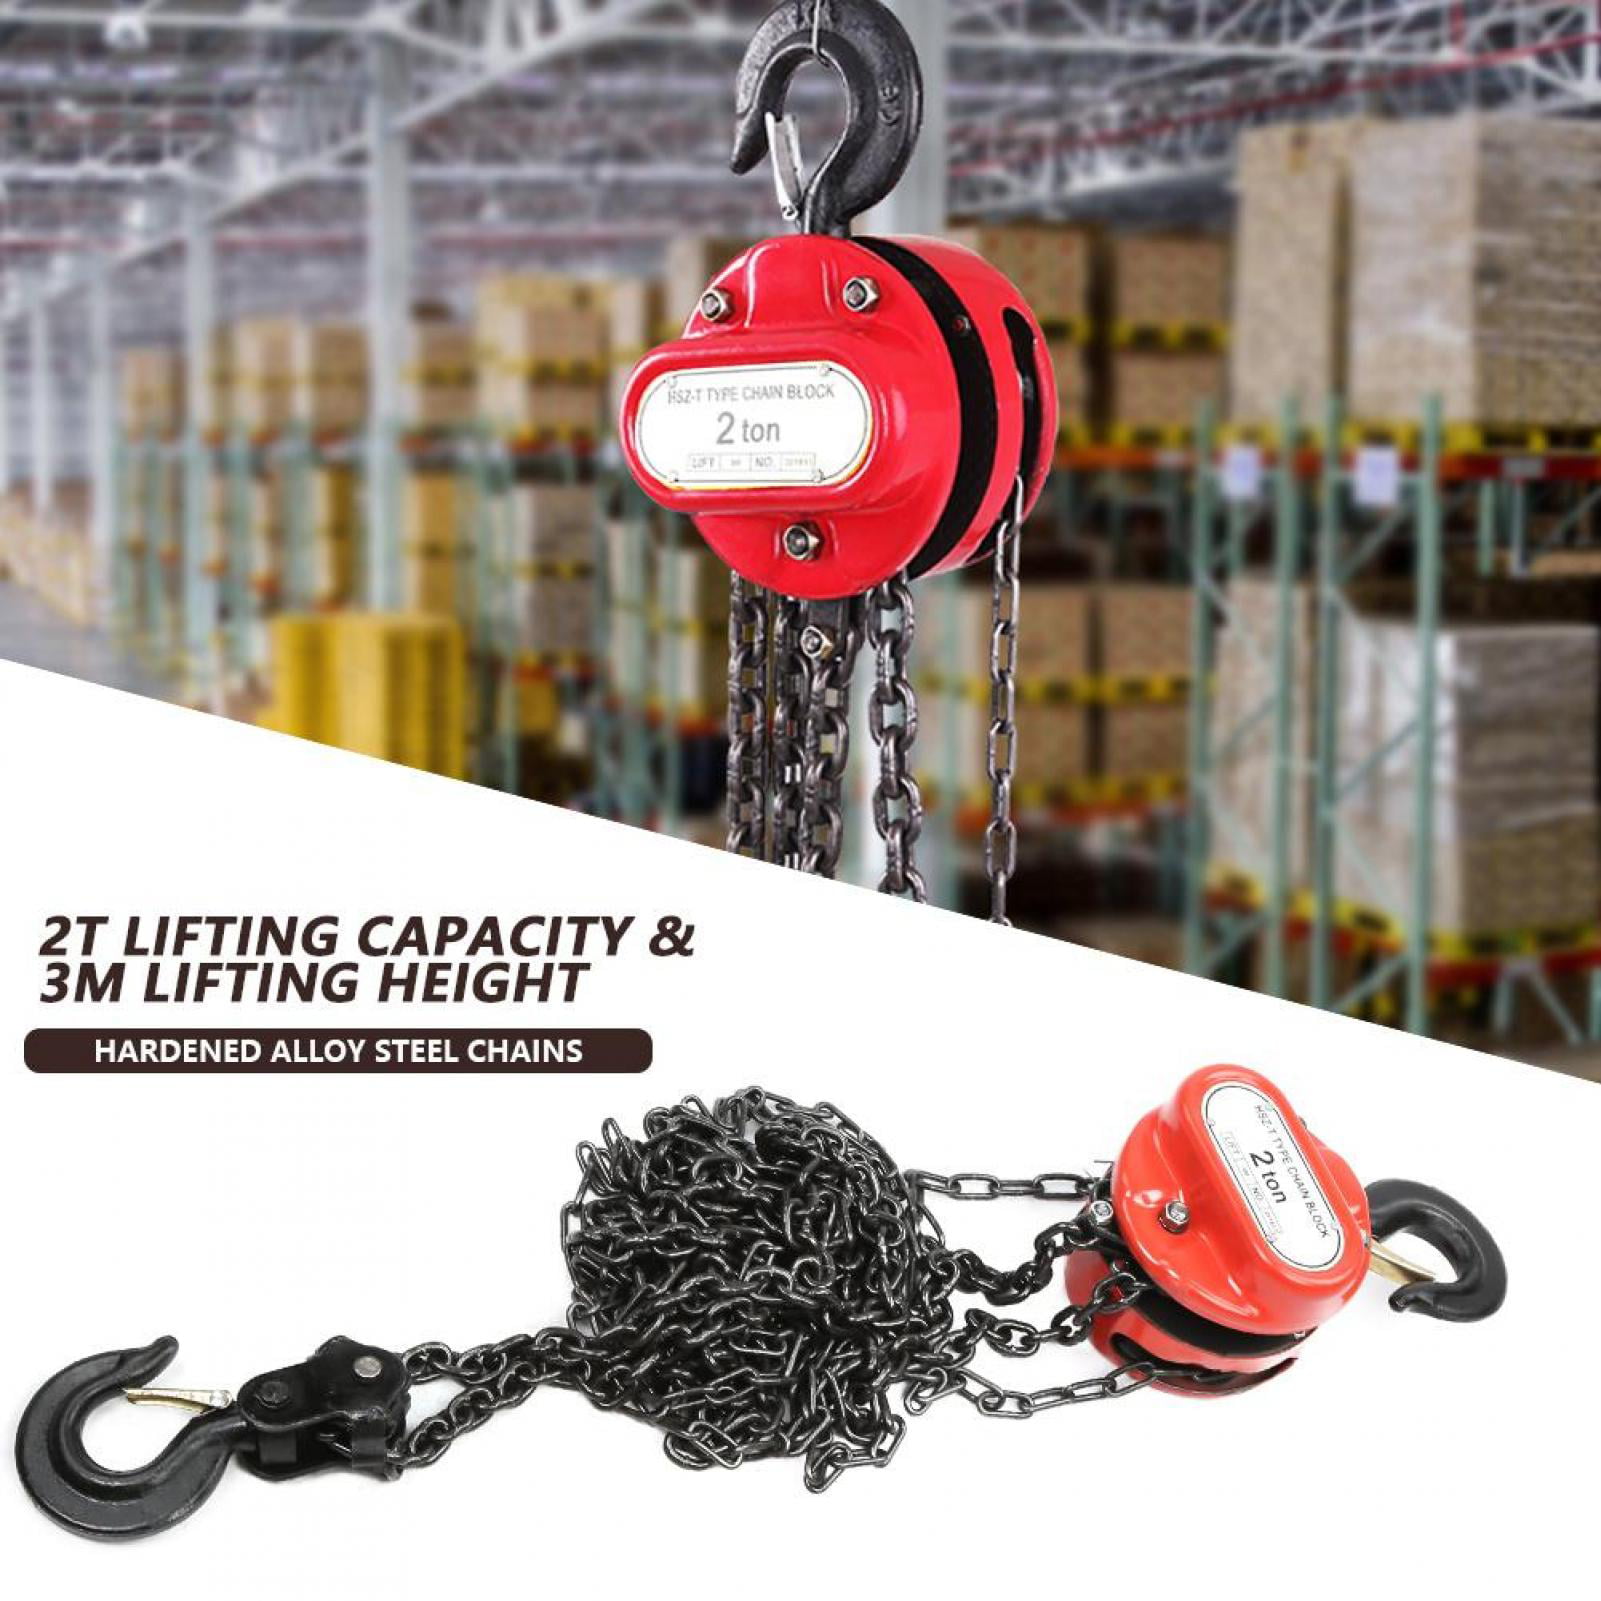 2 Tons Hardened Alloy Steel Chain Block 3 Meters For Workshop Factories Garage